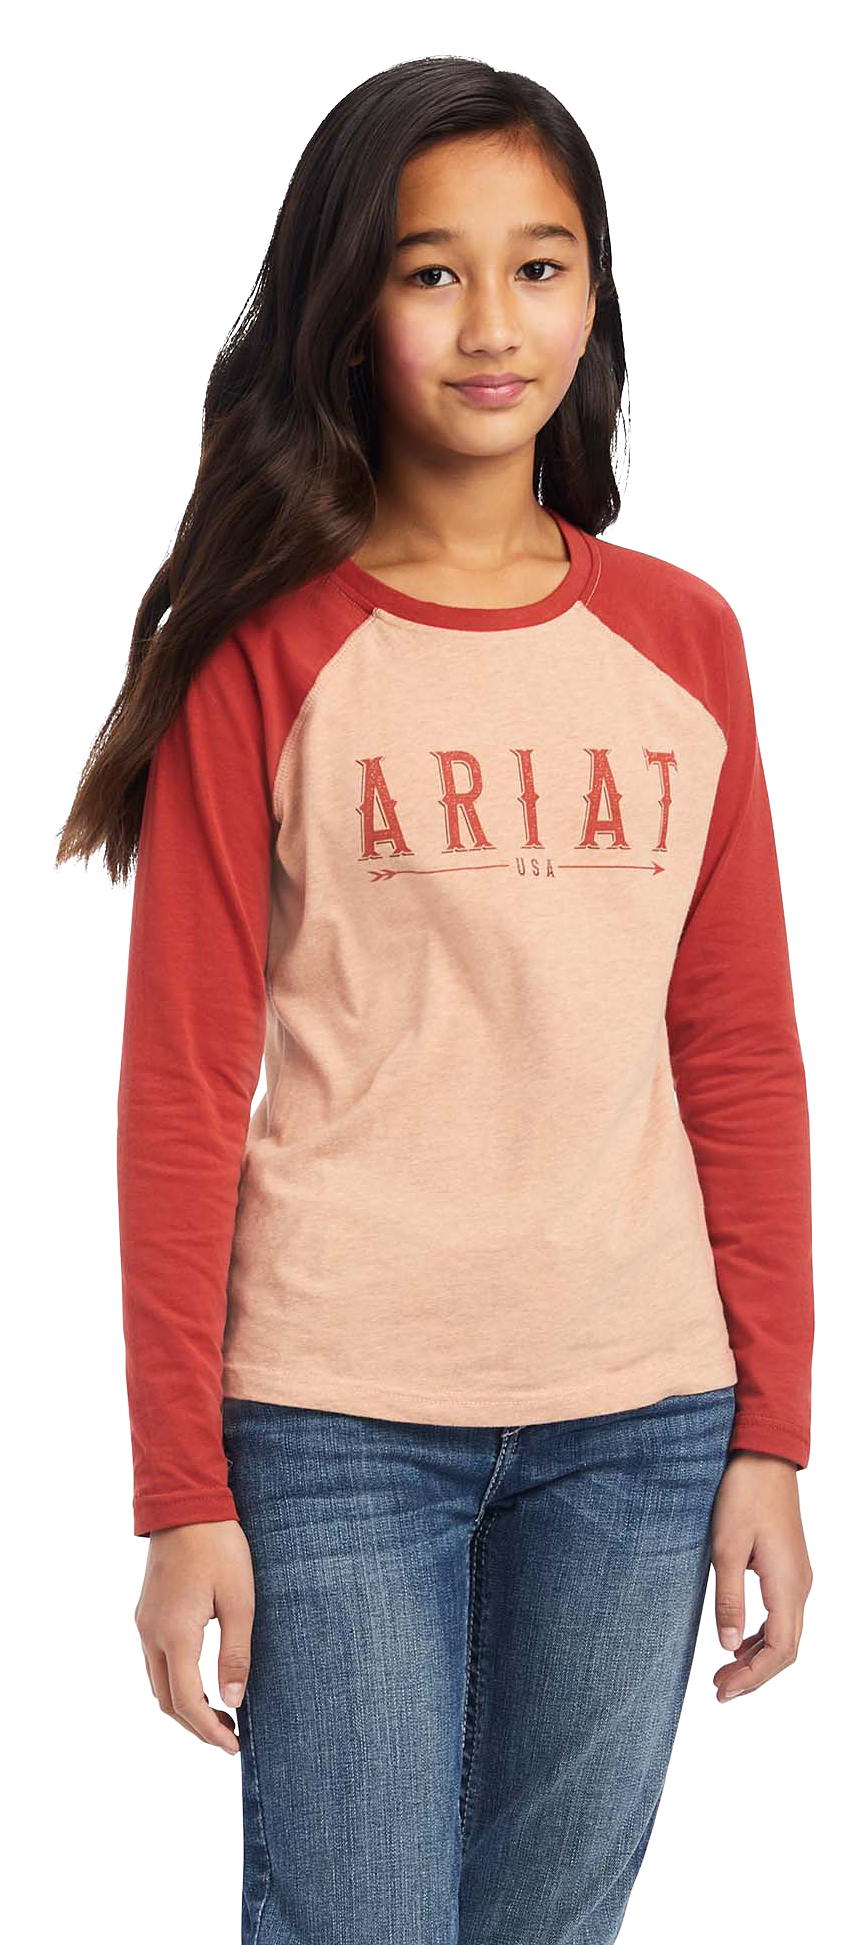 Ariat R.E.A.L. Arrow Long-Sleeve T-Shirt for Girls - Palm Heather - M